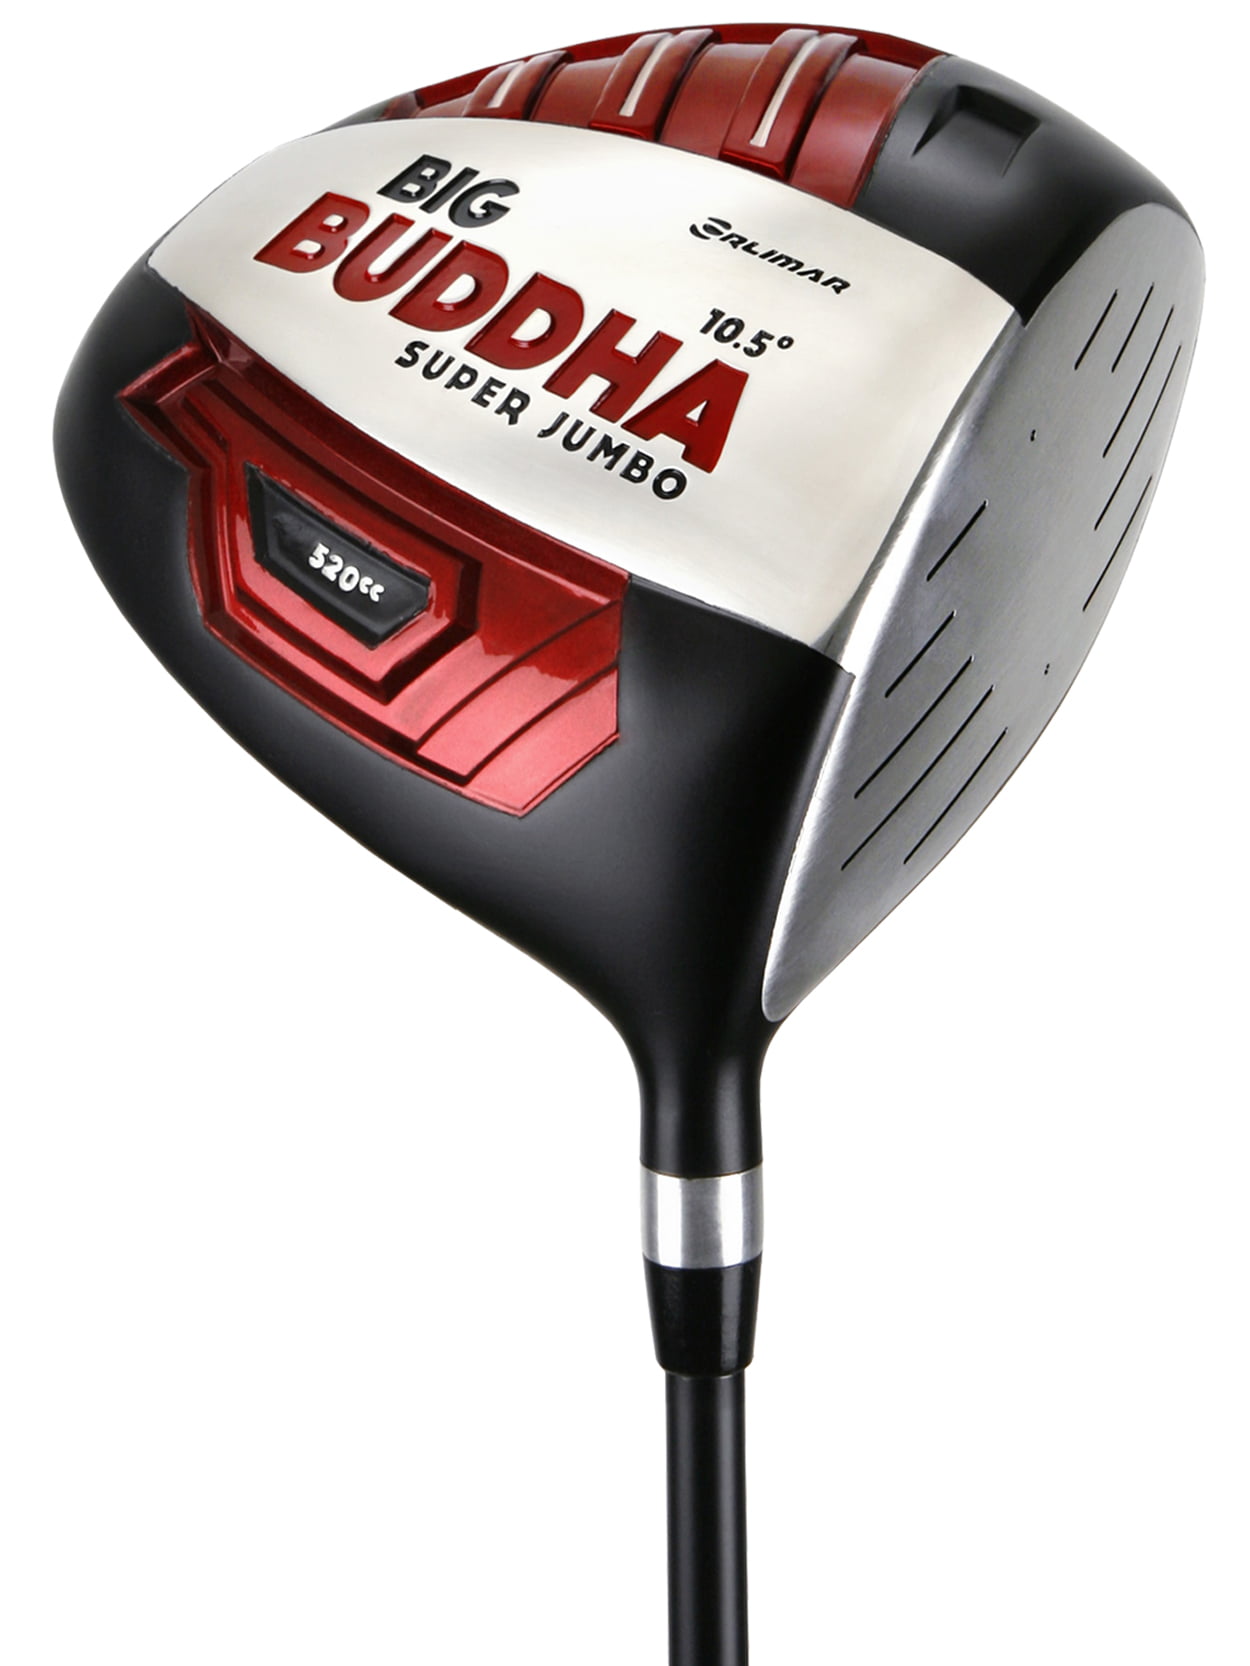 Orlimar Golf Black Big Buddha 520cc Super Jumbo Driver NEW